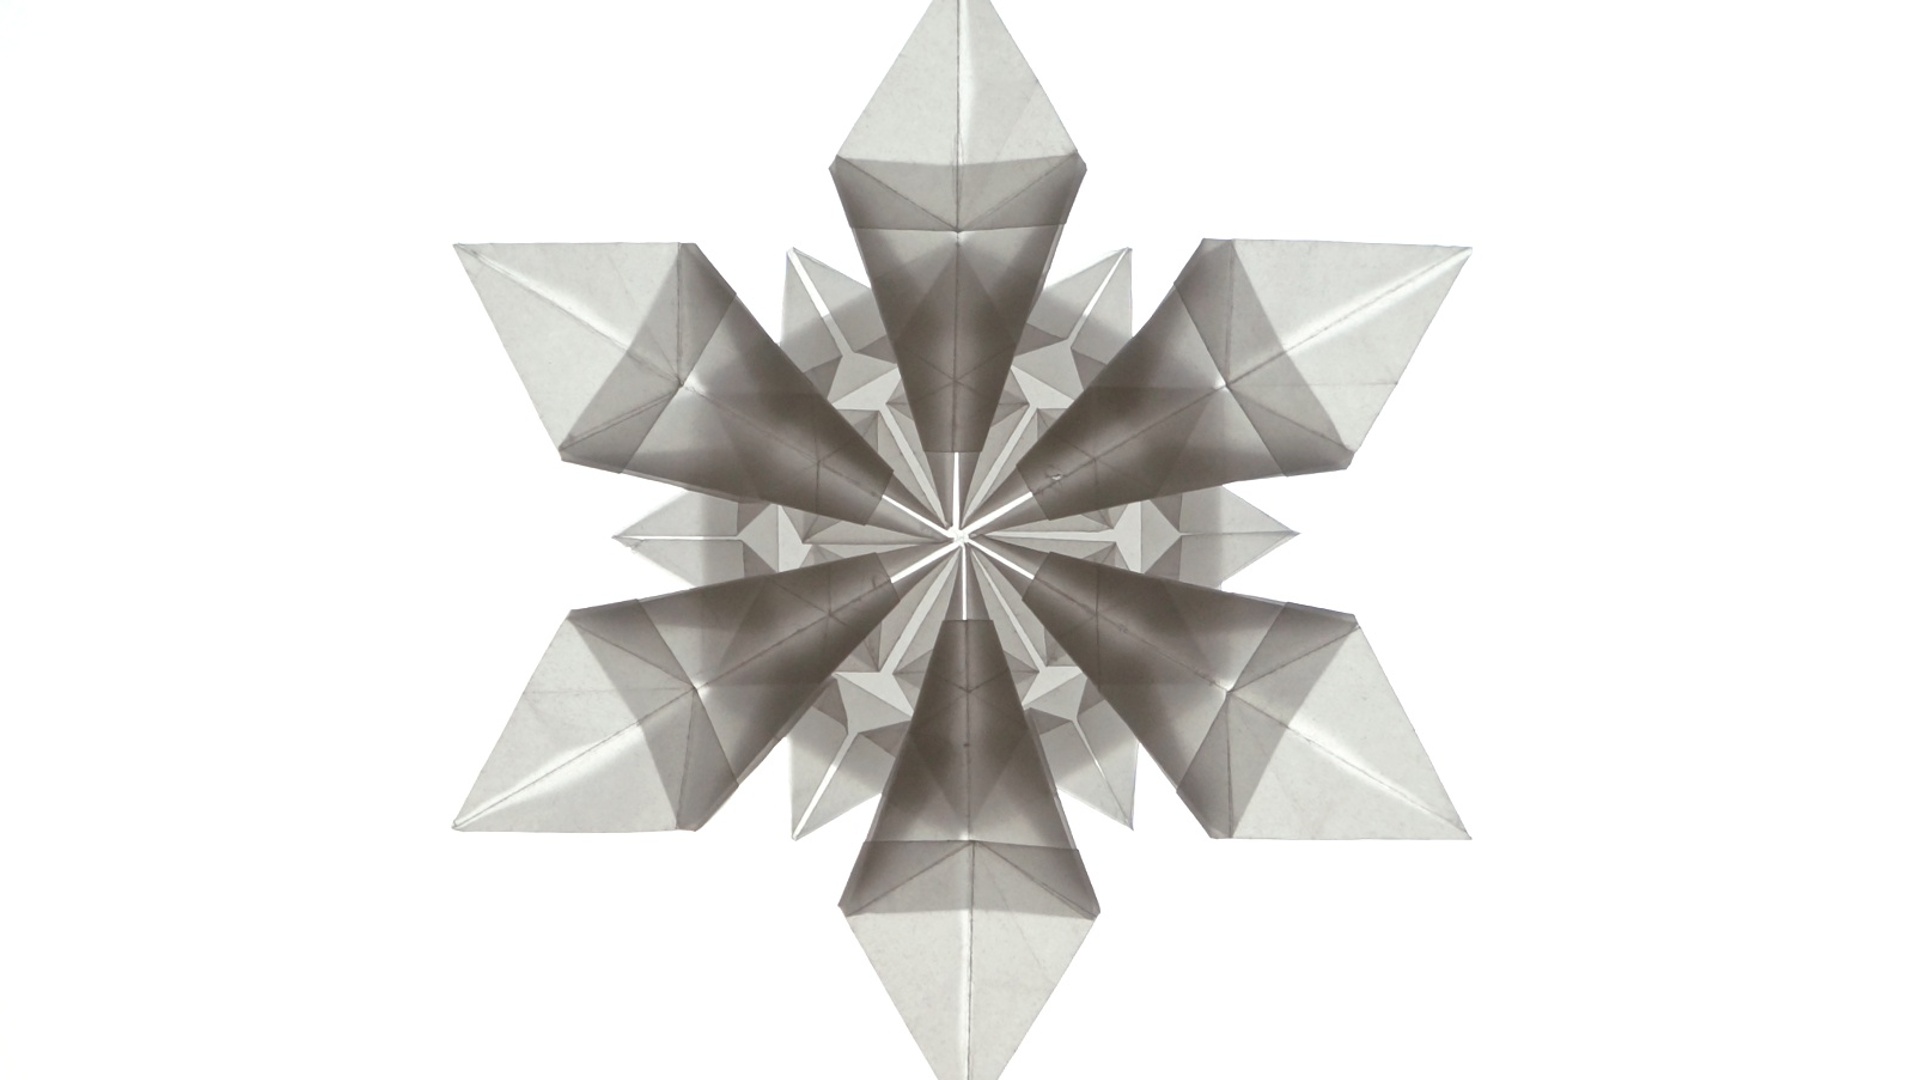 Origami Snowflake